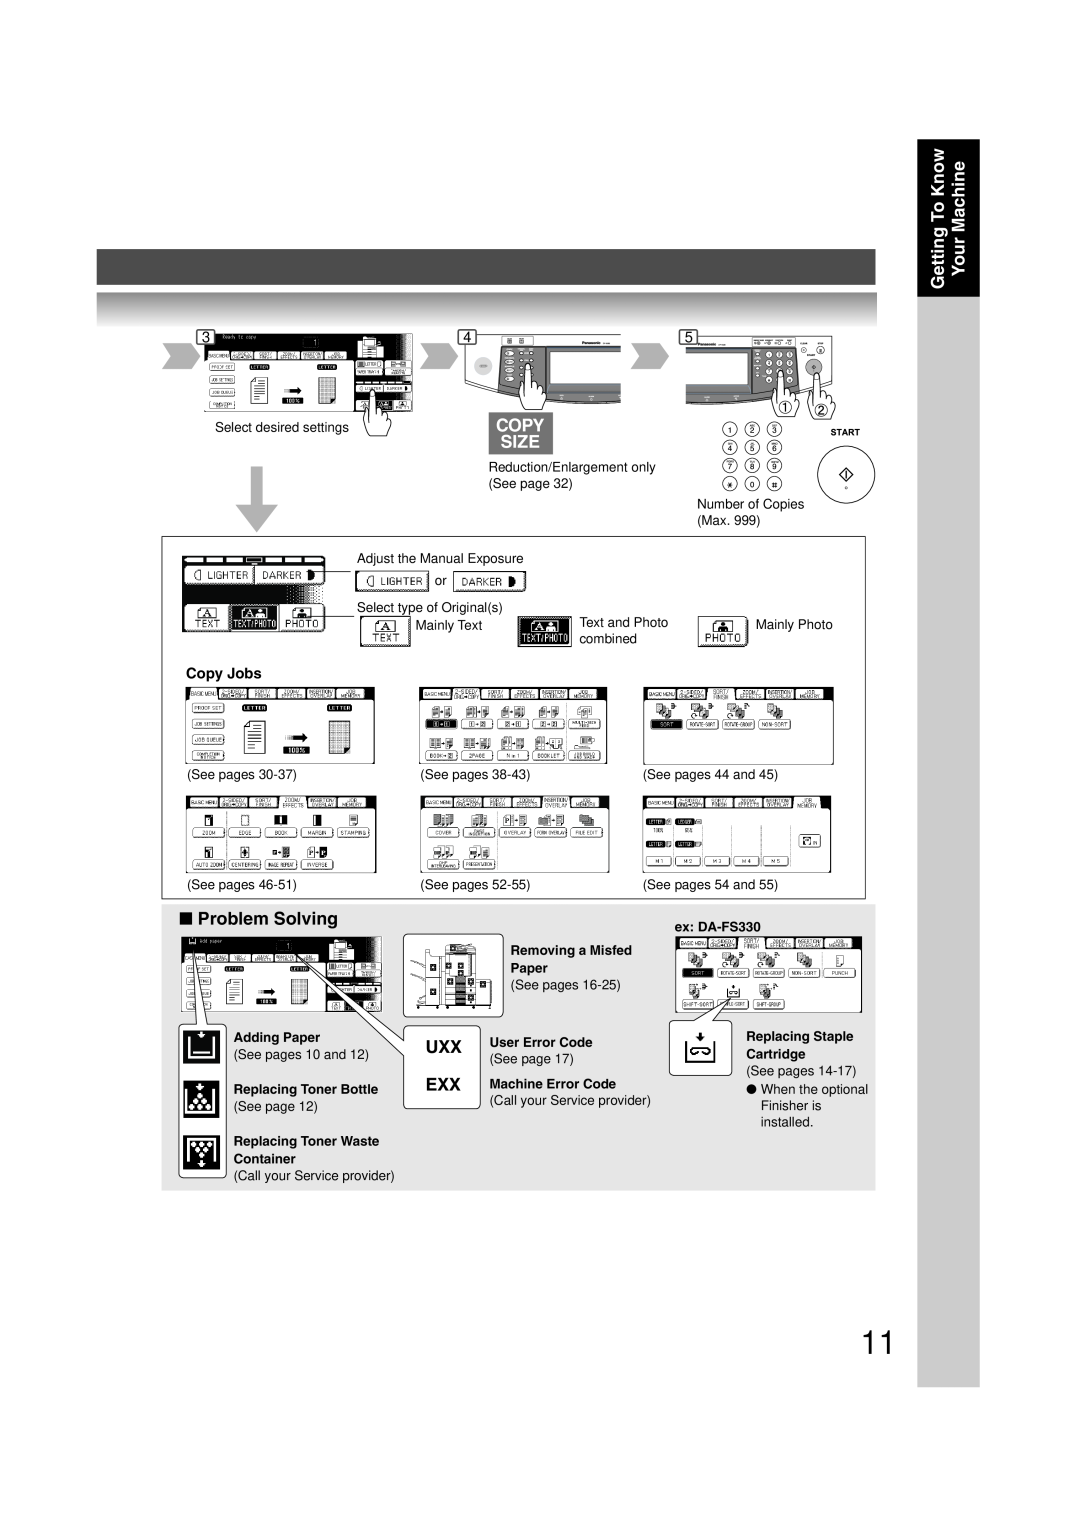 Panasonic 6020, 4520 manual Copy Size, Your Machine, Problem Solving, Copy Jobs 